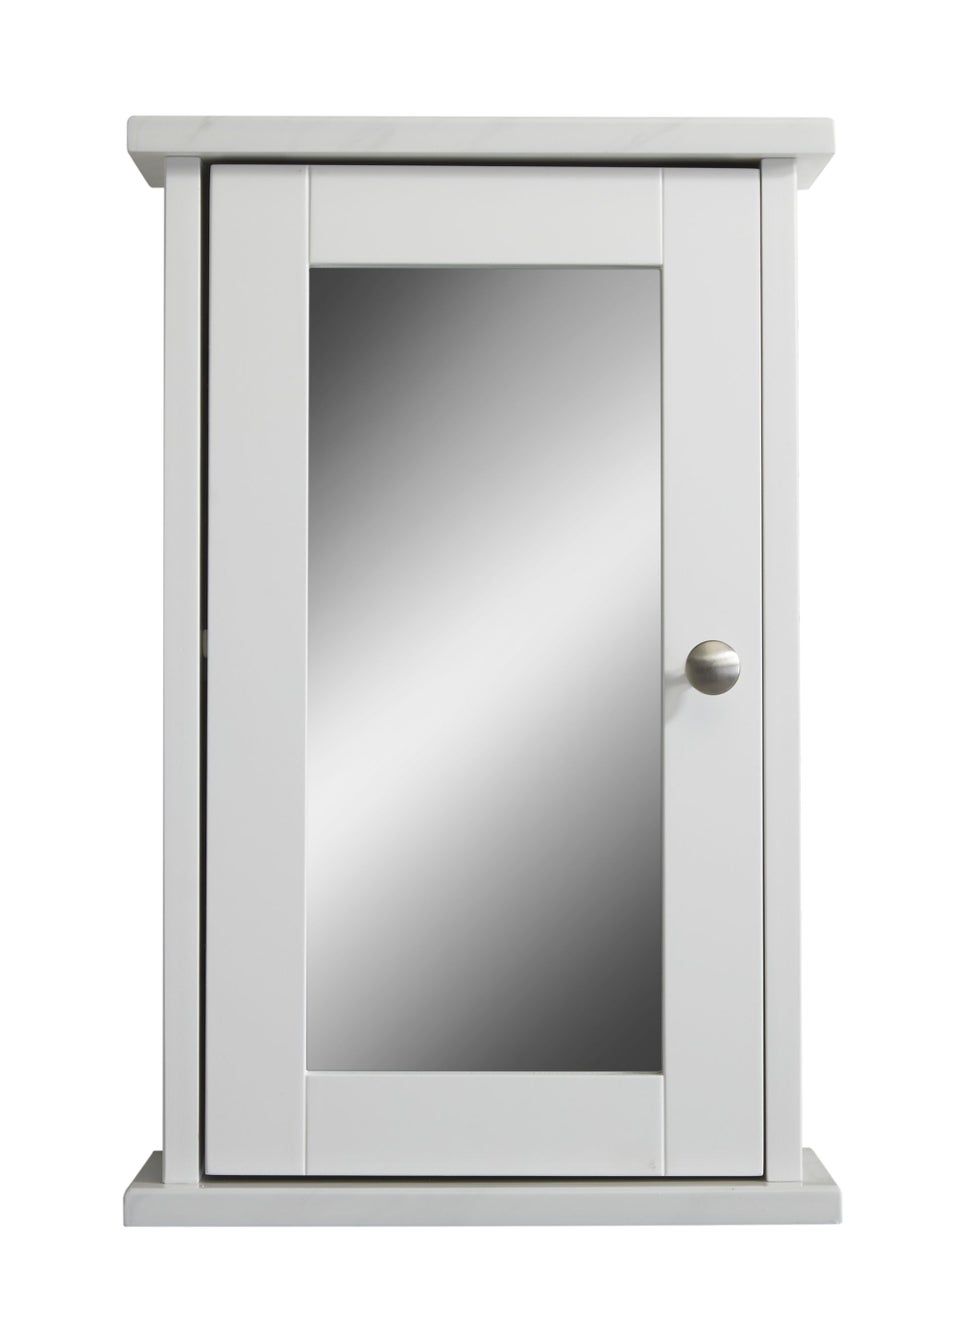 Lloyd Pascal Marble Effect Top Single Mirror Cabinet (46cm x 30cm x 14cm)